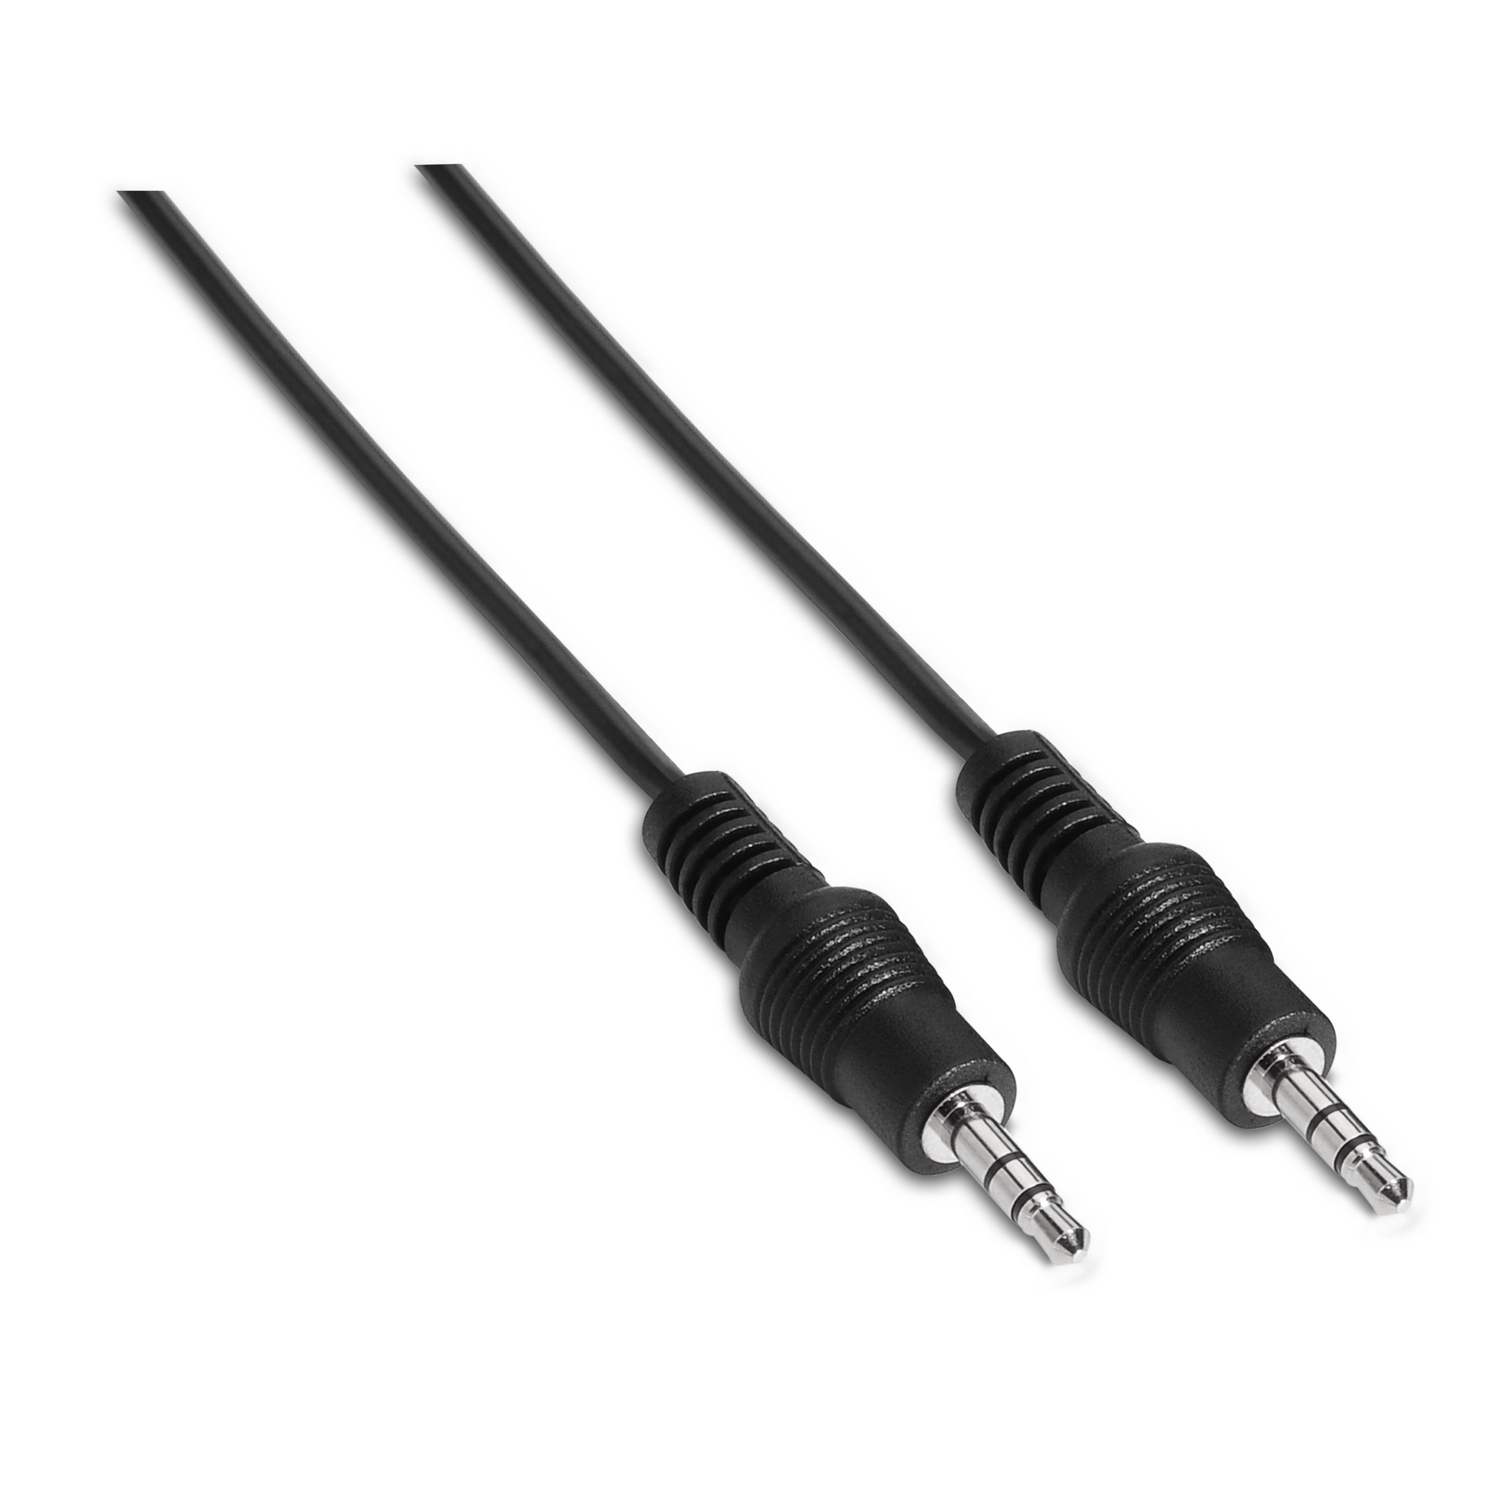 Xo nbr175b serie pro cable audio mini jack 3.5mm macho a mini jack